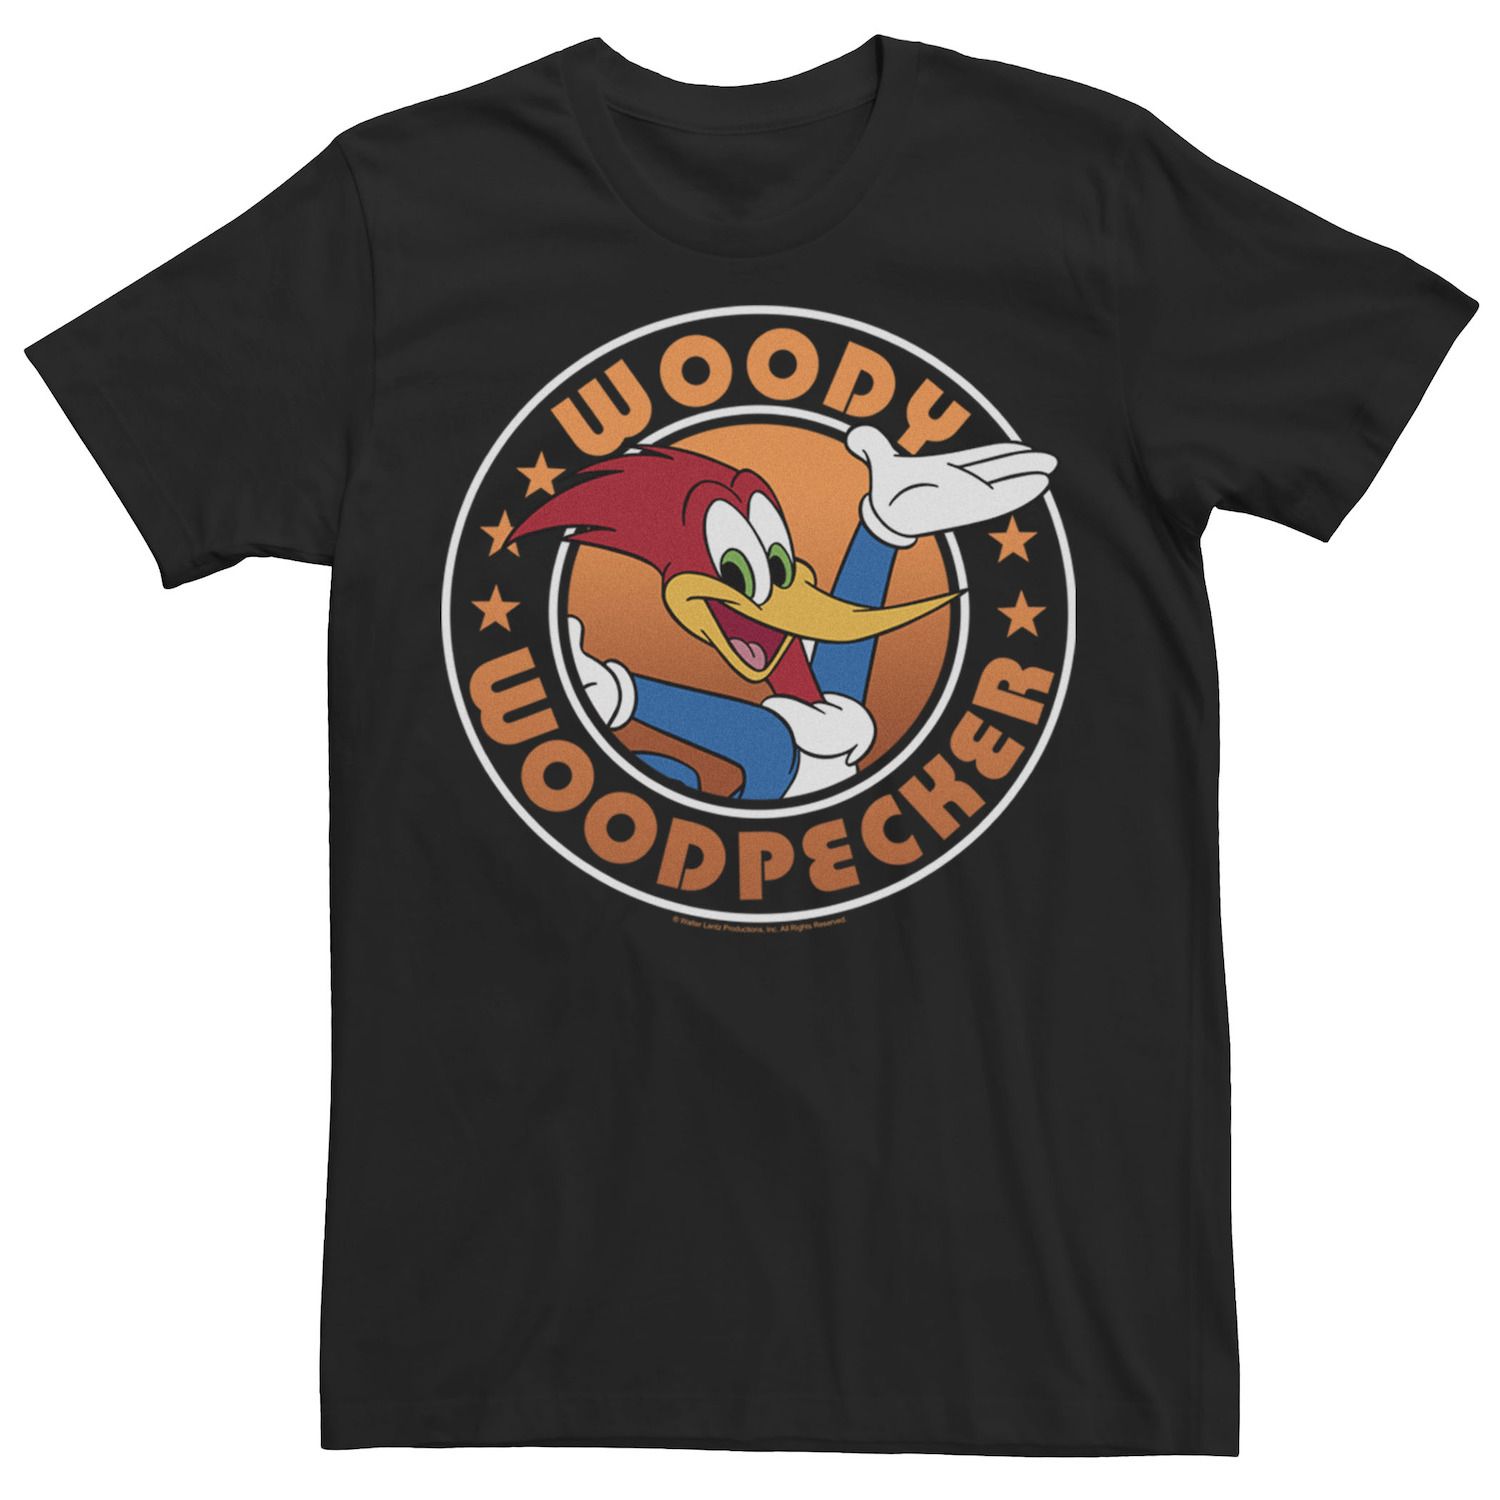 Мужская футболка с круглым штампом и портретом Woody Woodpecker Licensed Character